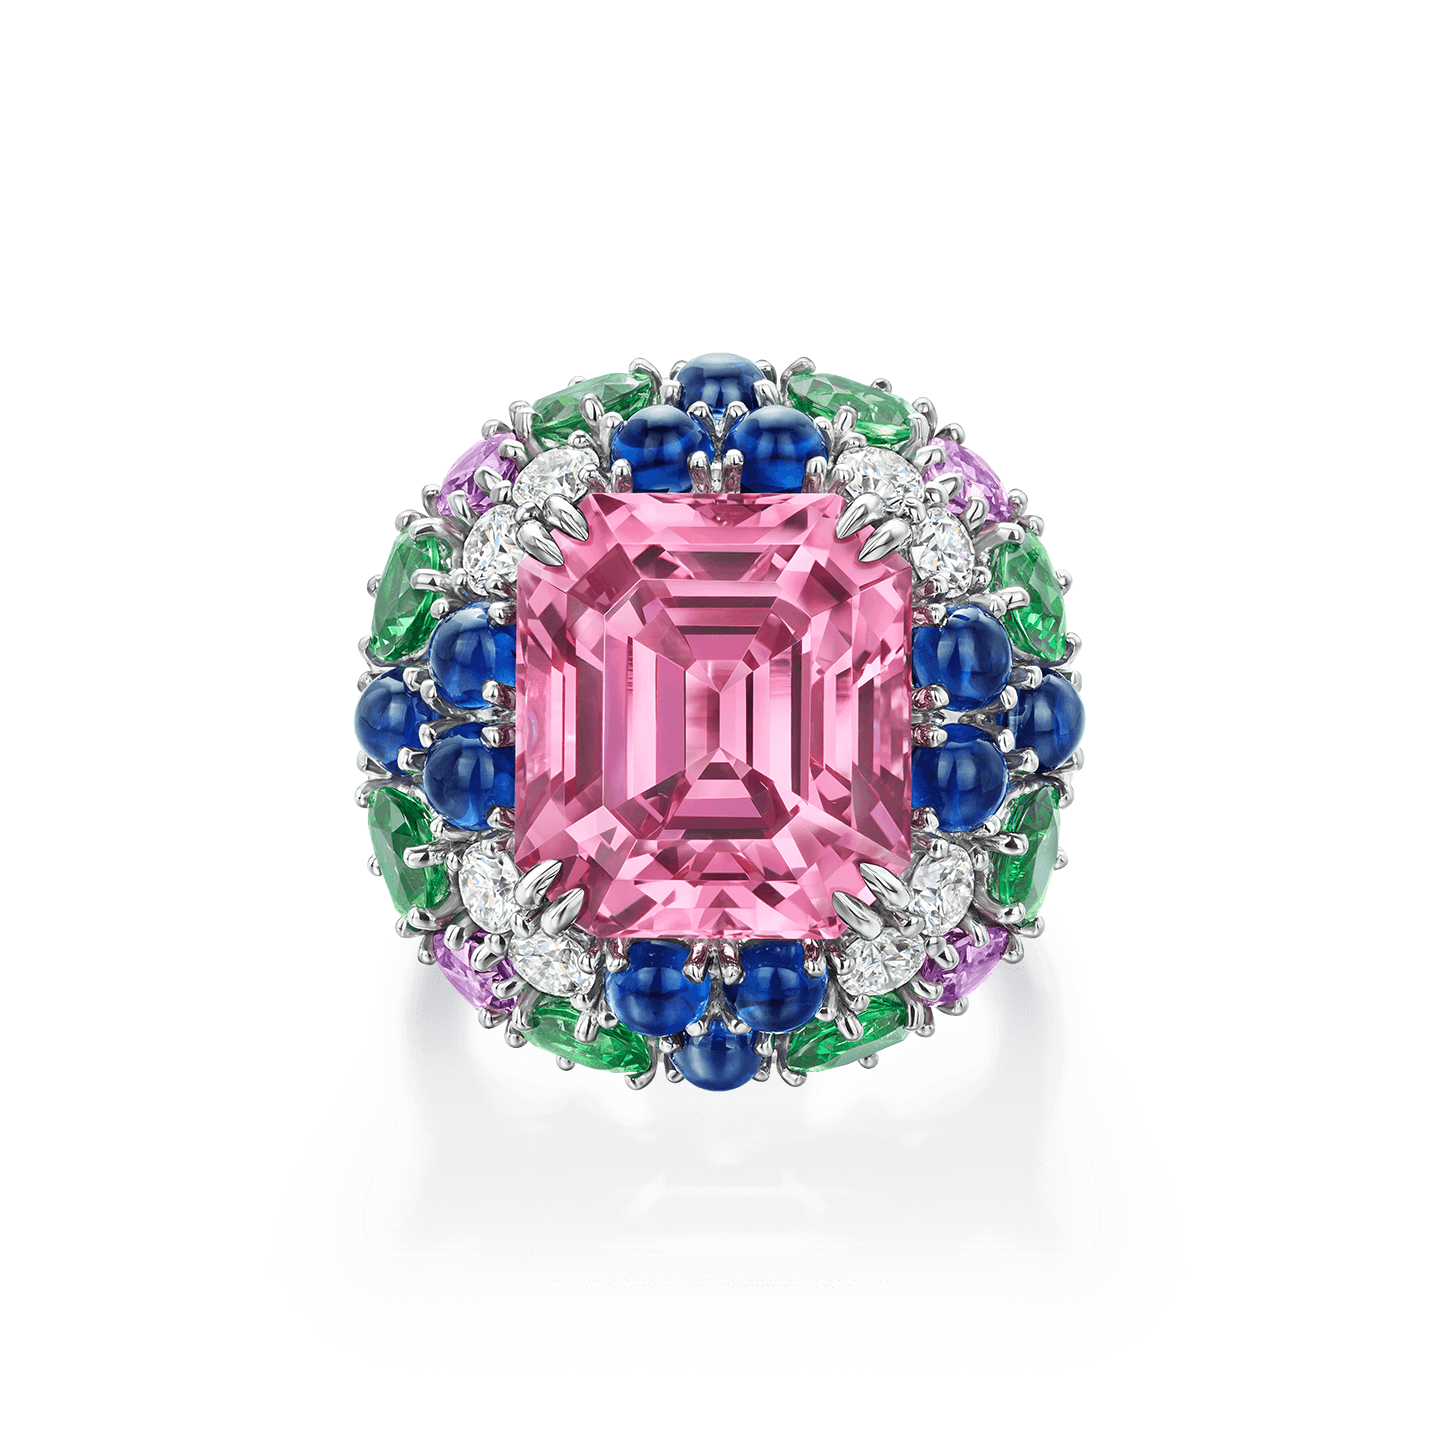 Winston Candy Purplish Pink Spinel Ring with Sapphires, Tsavorite Garnets and Diamonds